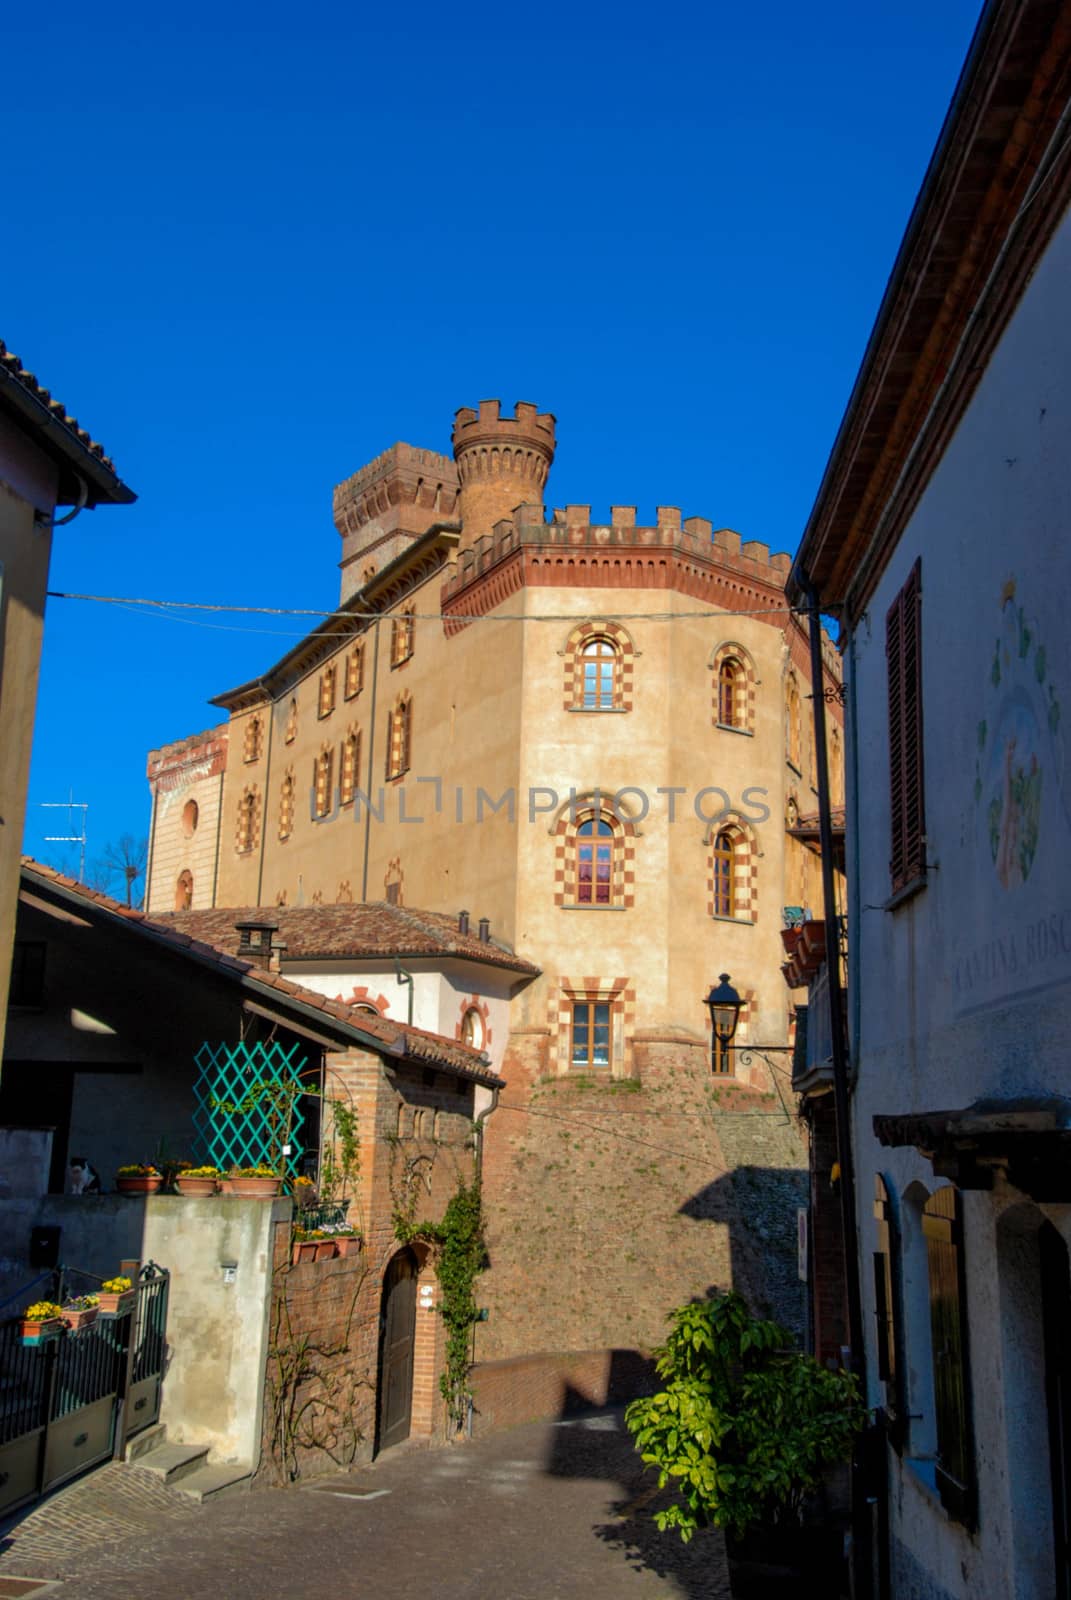 Castle "Falletti". Located in the center of the village of Barolo, CN - Piedmont - Italy